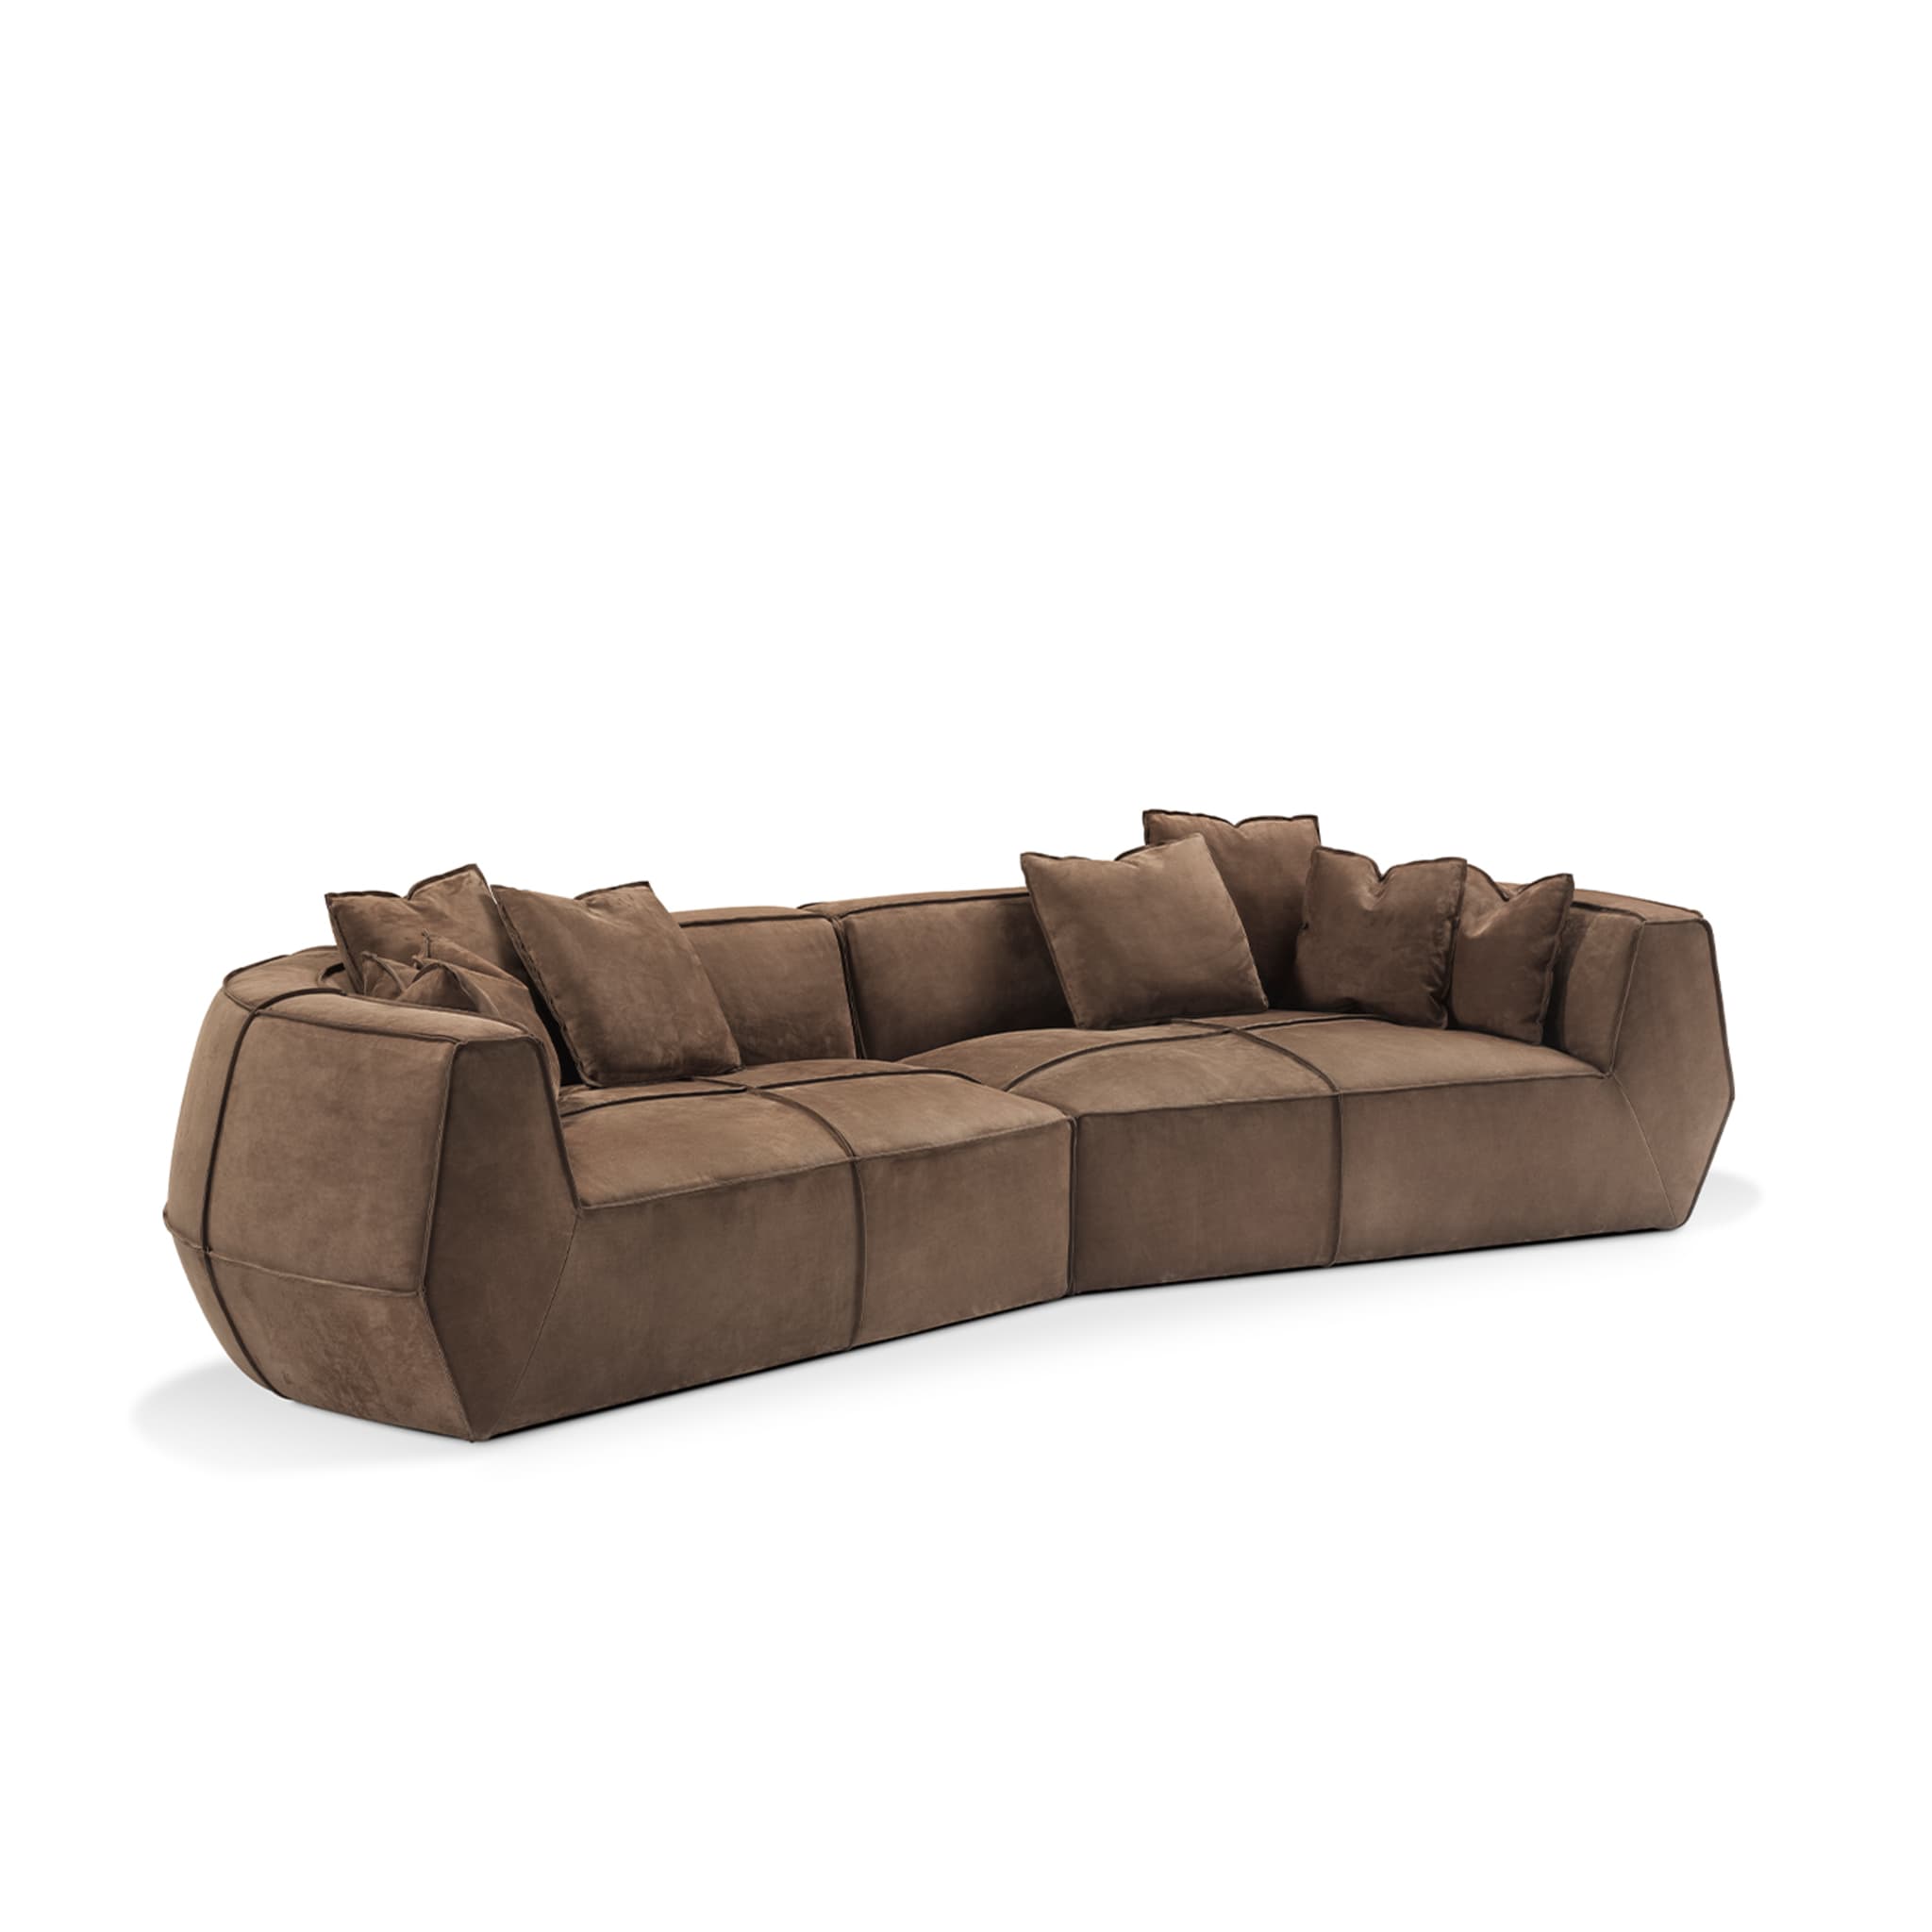 Infinito Medium Brown Sofa by Lorenza Bozzoli - Alternative view 3